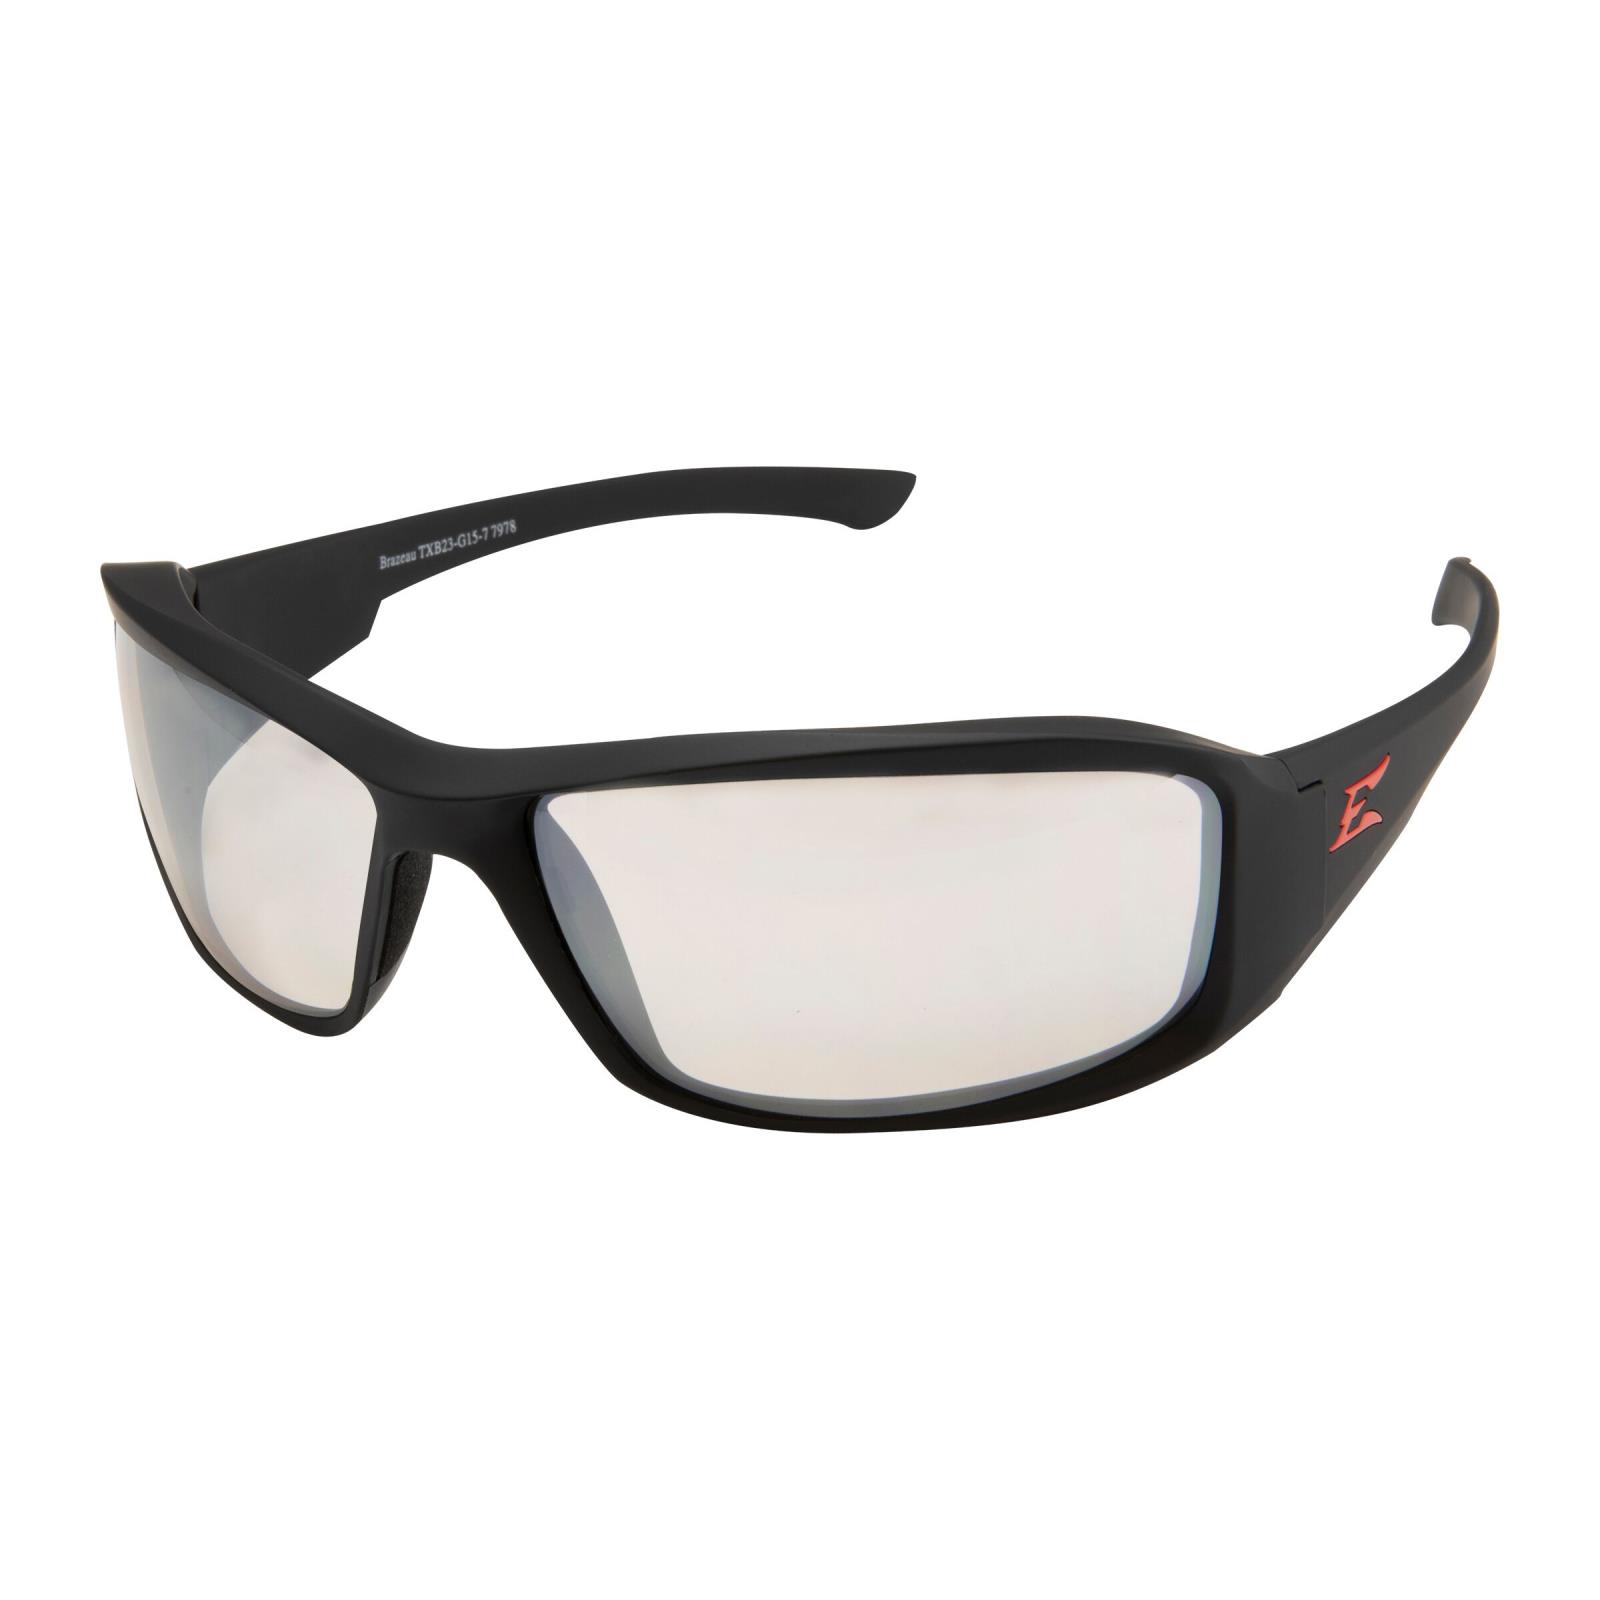 Edge Eyewear Brazeau Torque White Frame Blue Mirror Safety Glasses Sun Z87+